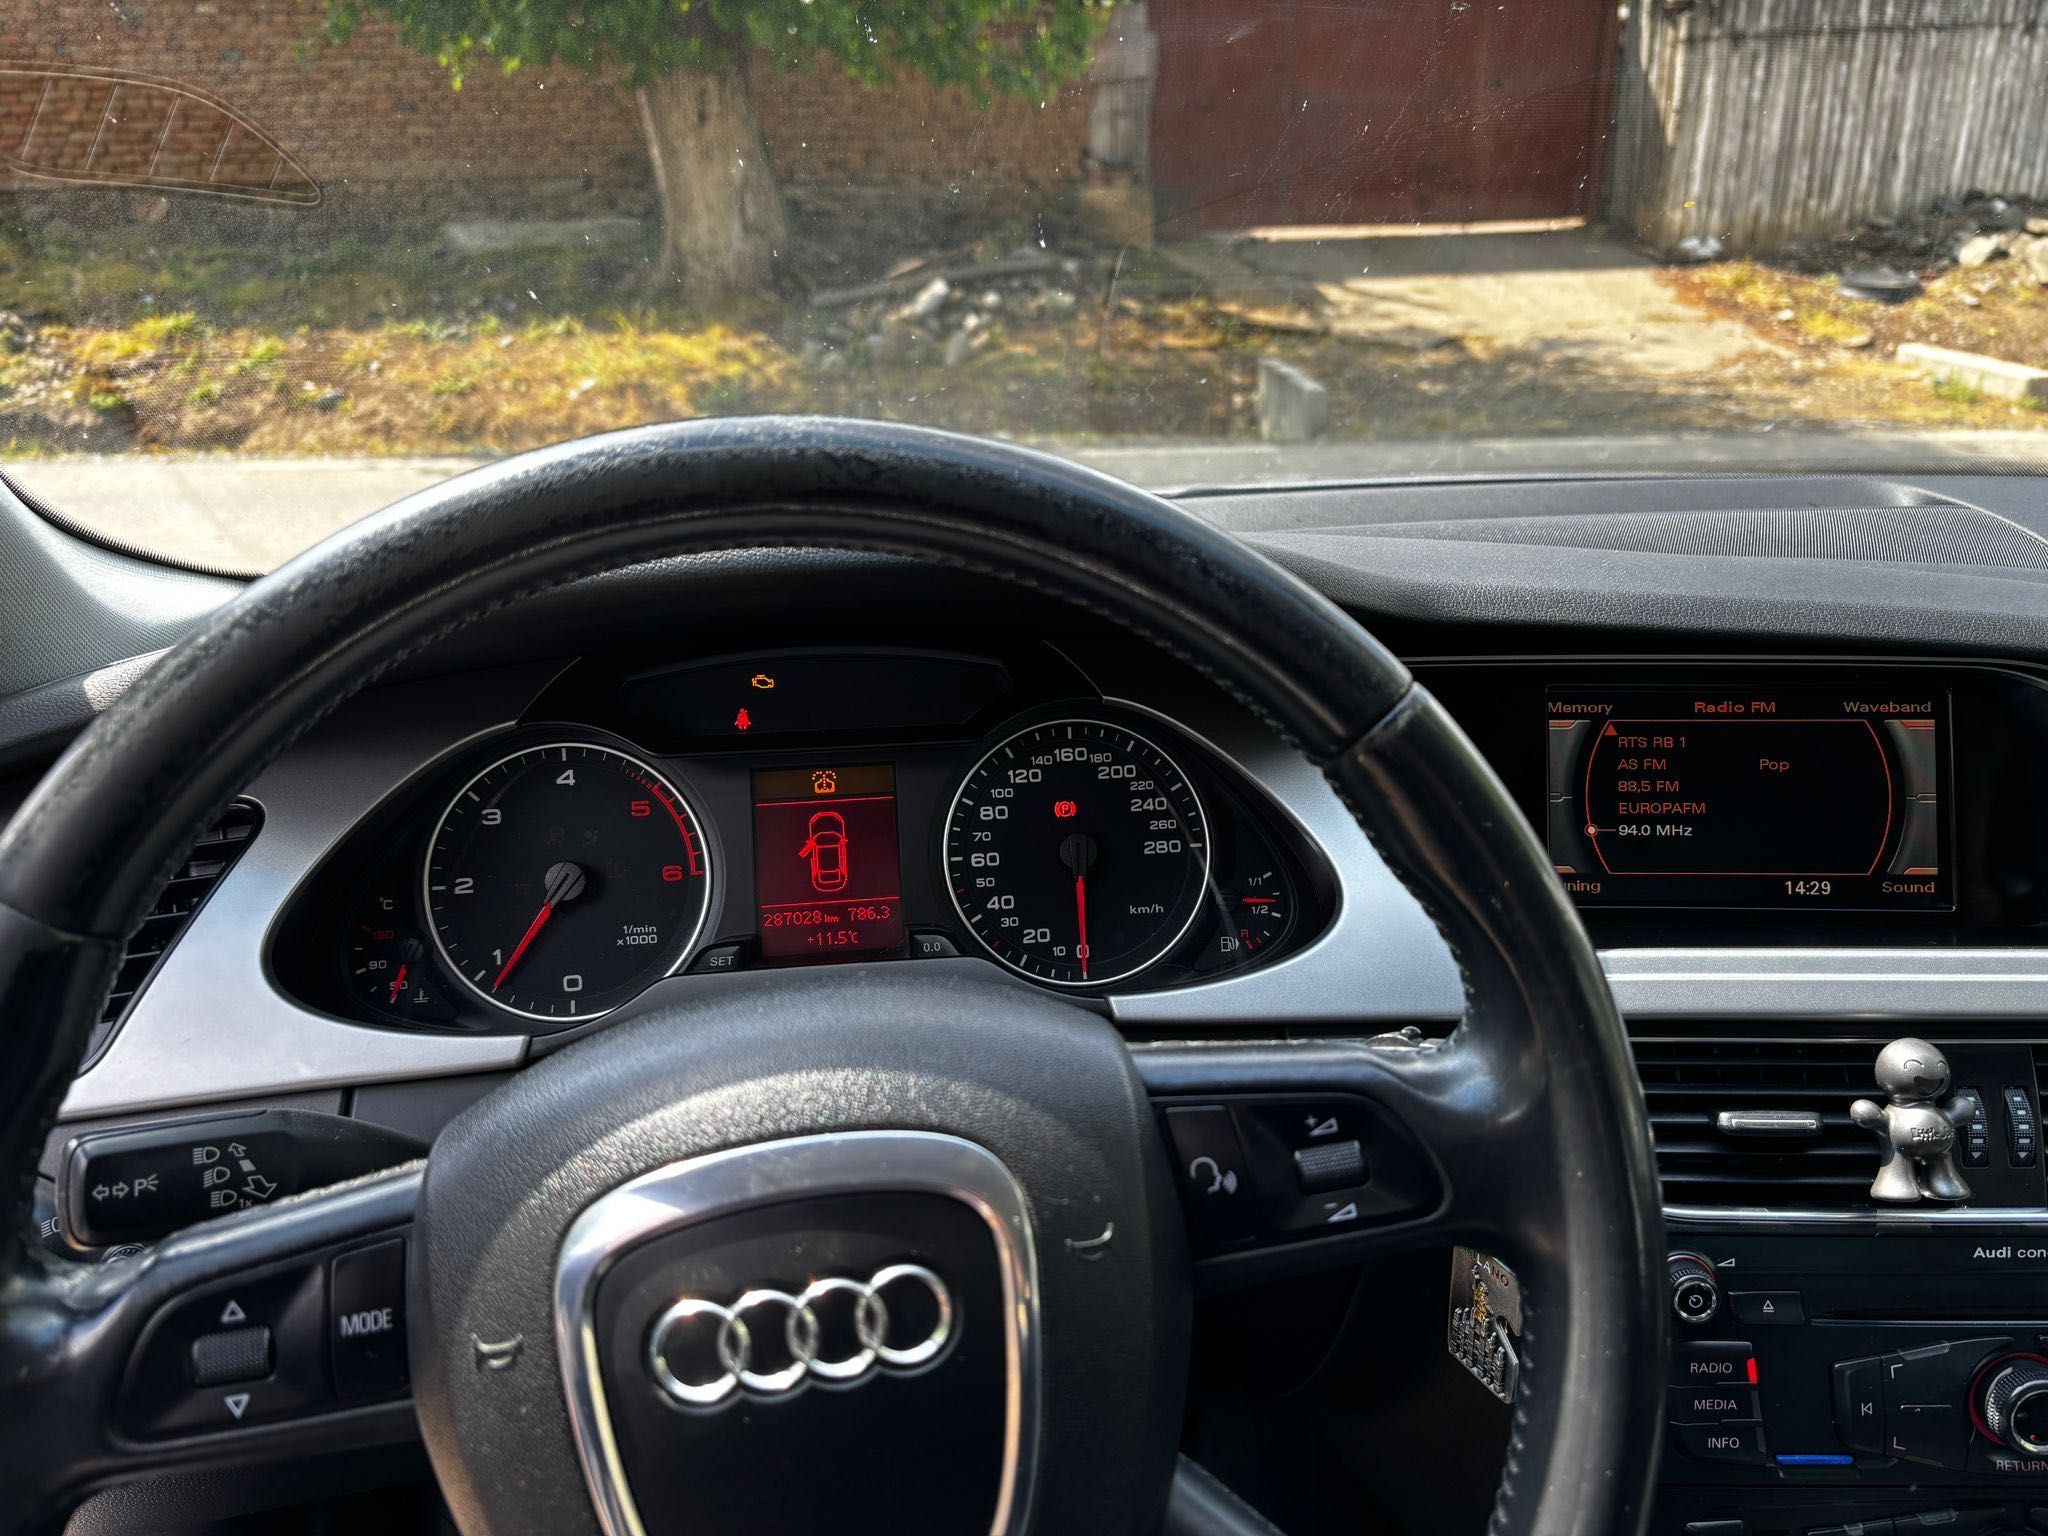 Audi A4, B8, 2.0 TDI - CAGC